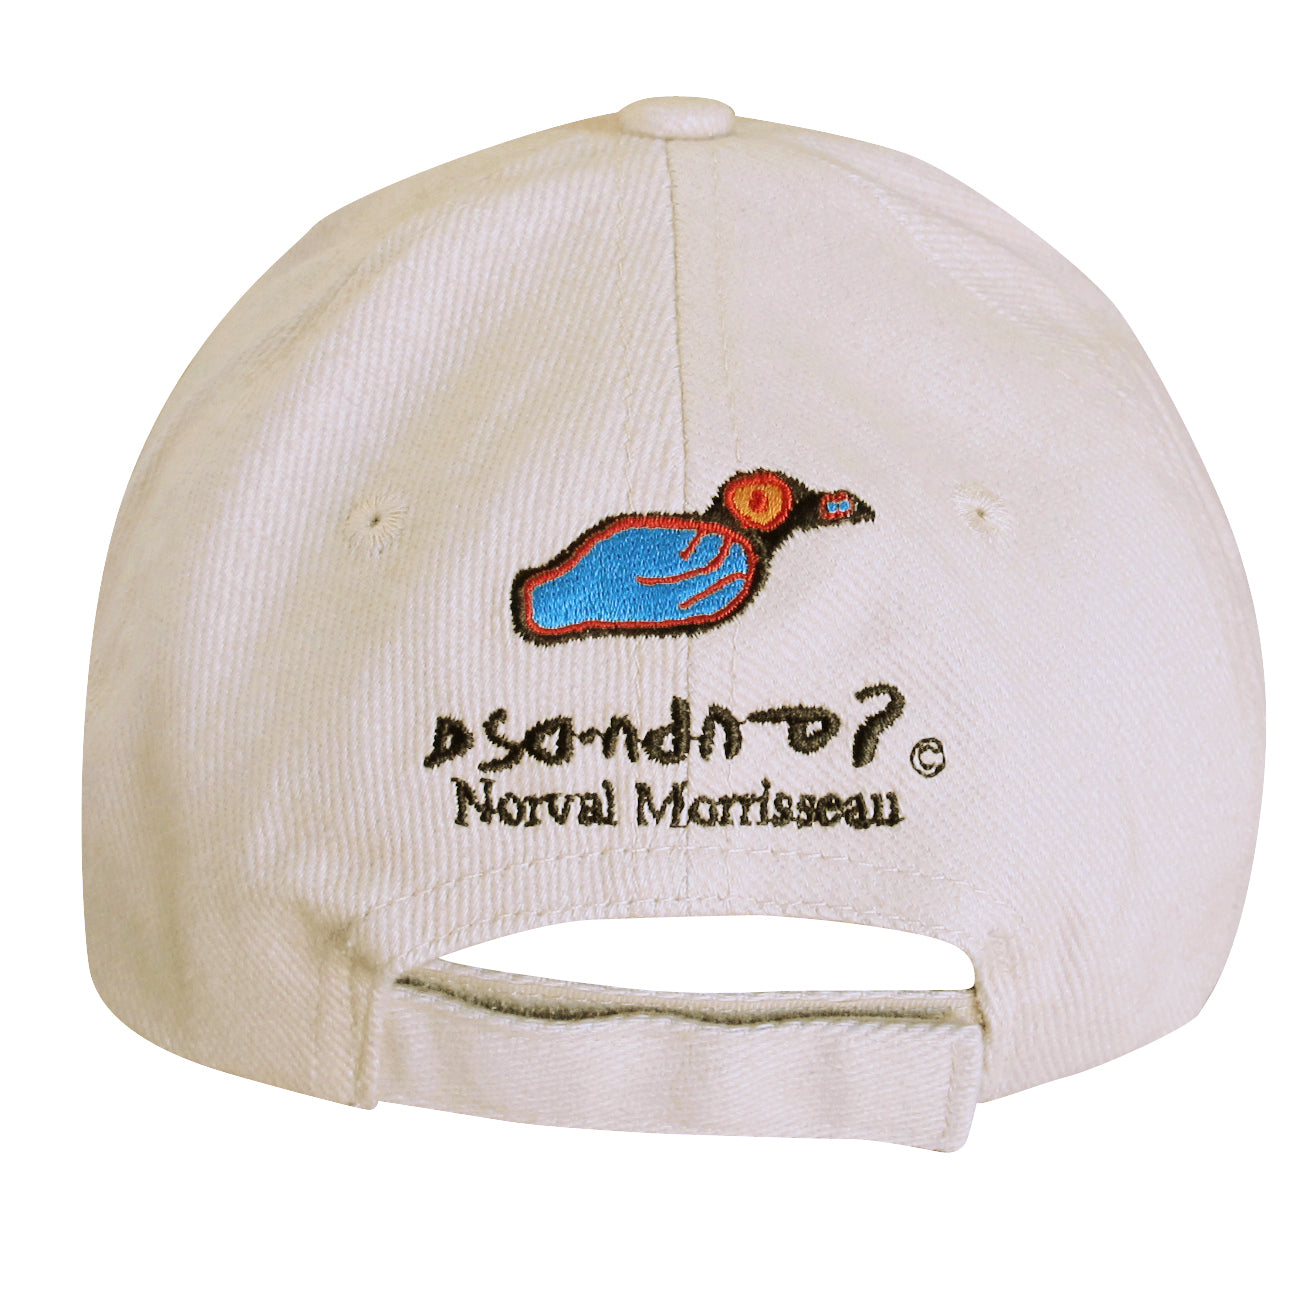 Norval Morrisseau Moose Harmony Embroidered Baseball Cap